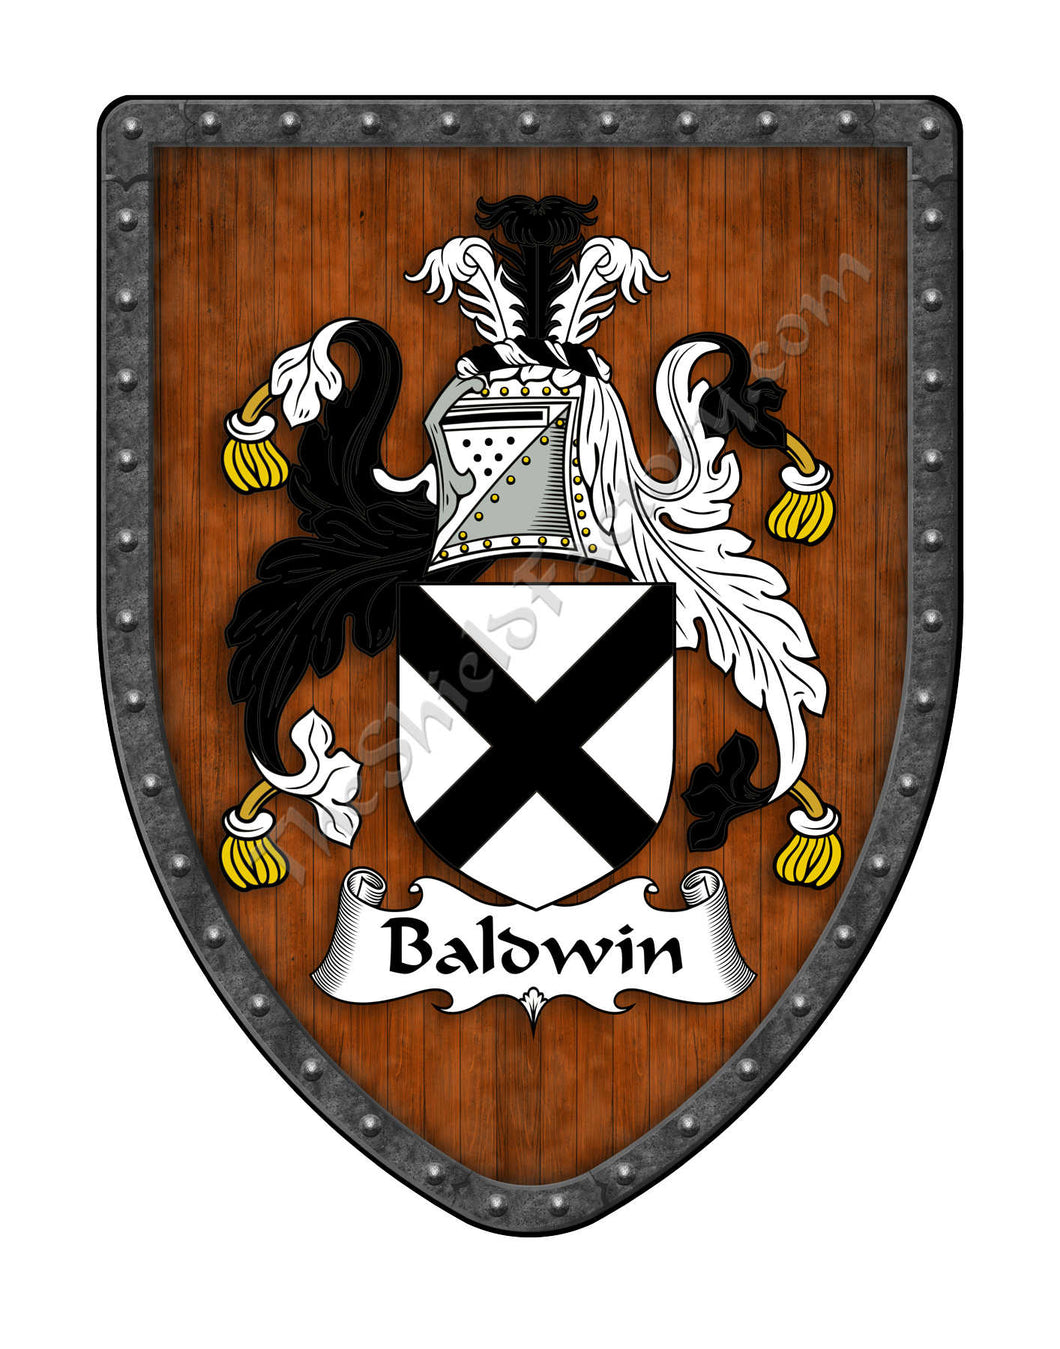 Baldwin Family Coat of Arms Crest